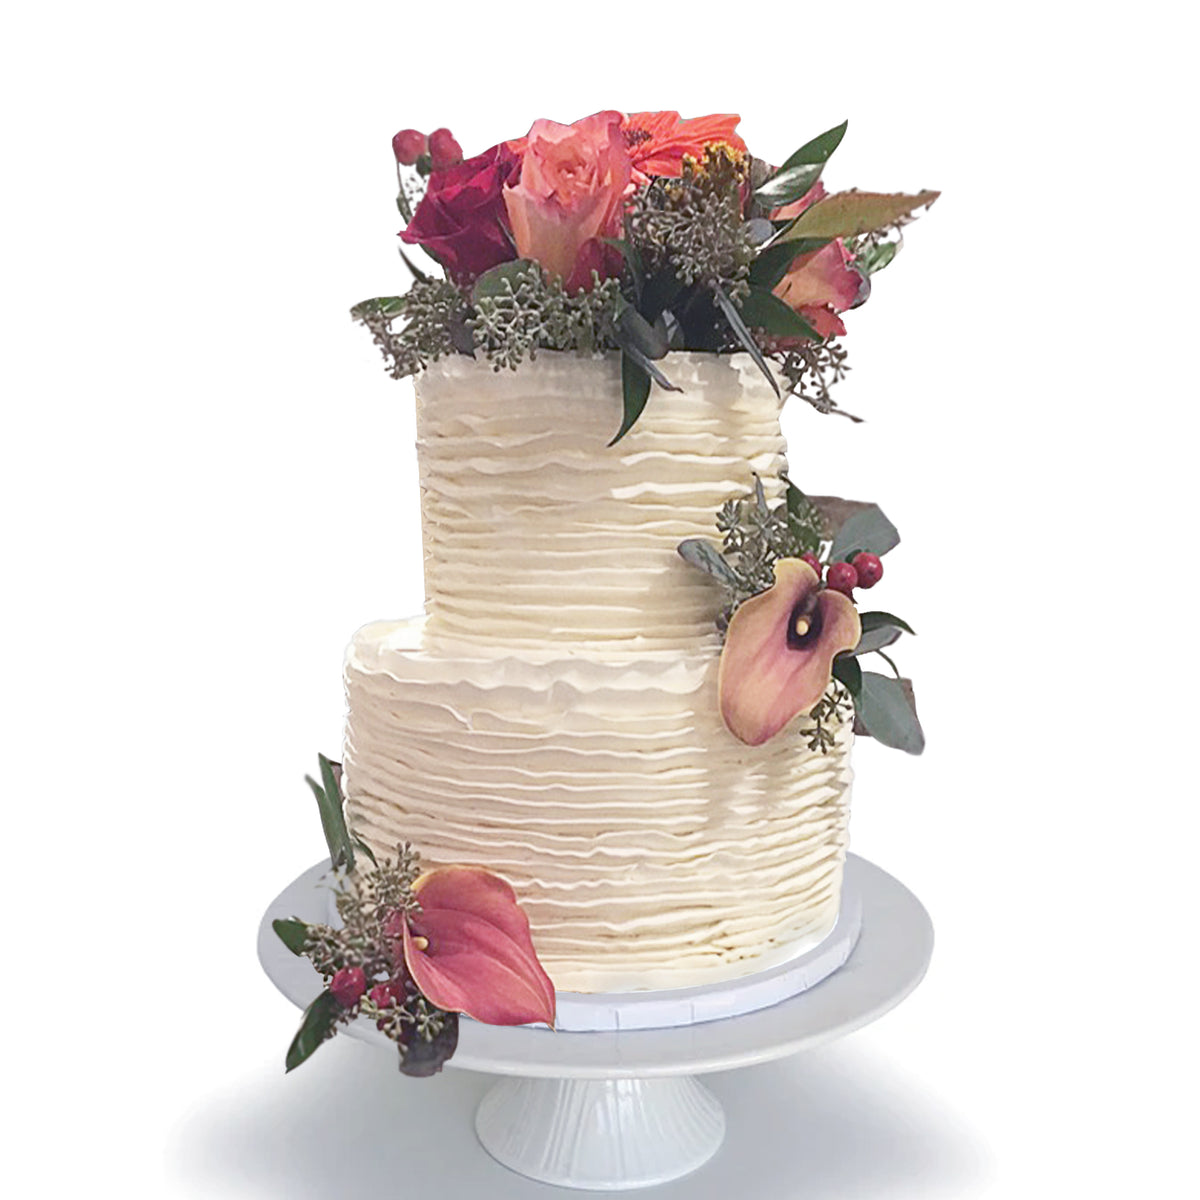 Ruffle Cake Tutorial - Pretty Little Details